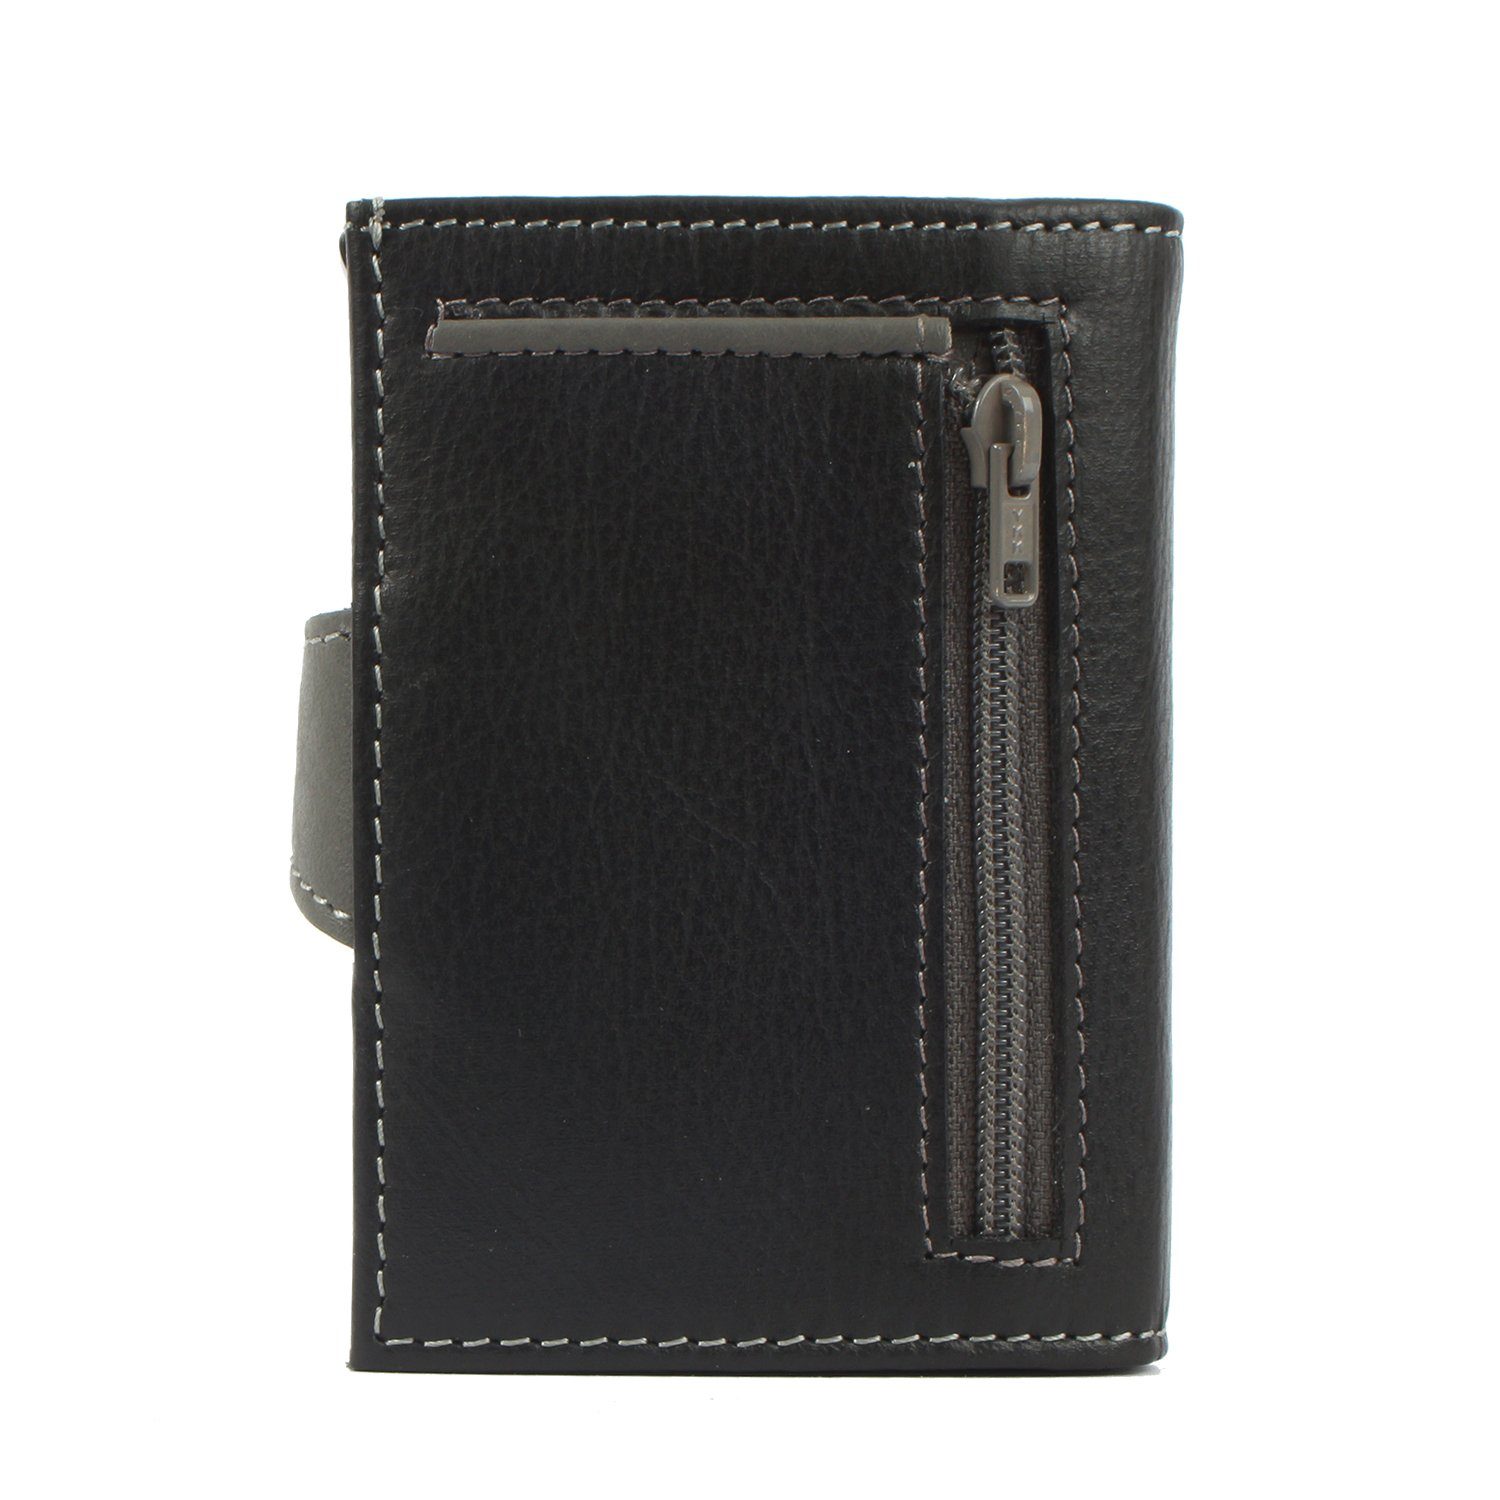 Margelisch Mini Geldbörse noonyu double black RFID Upcycling aus Kreditkartenbörse leather, Leder